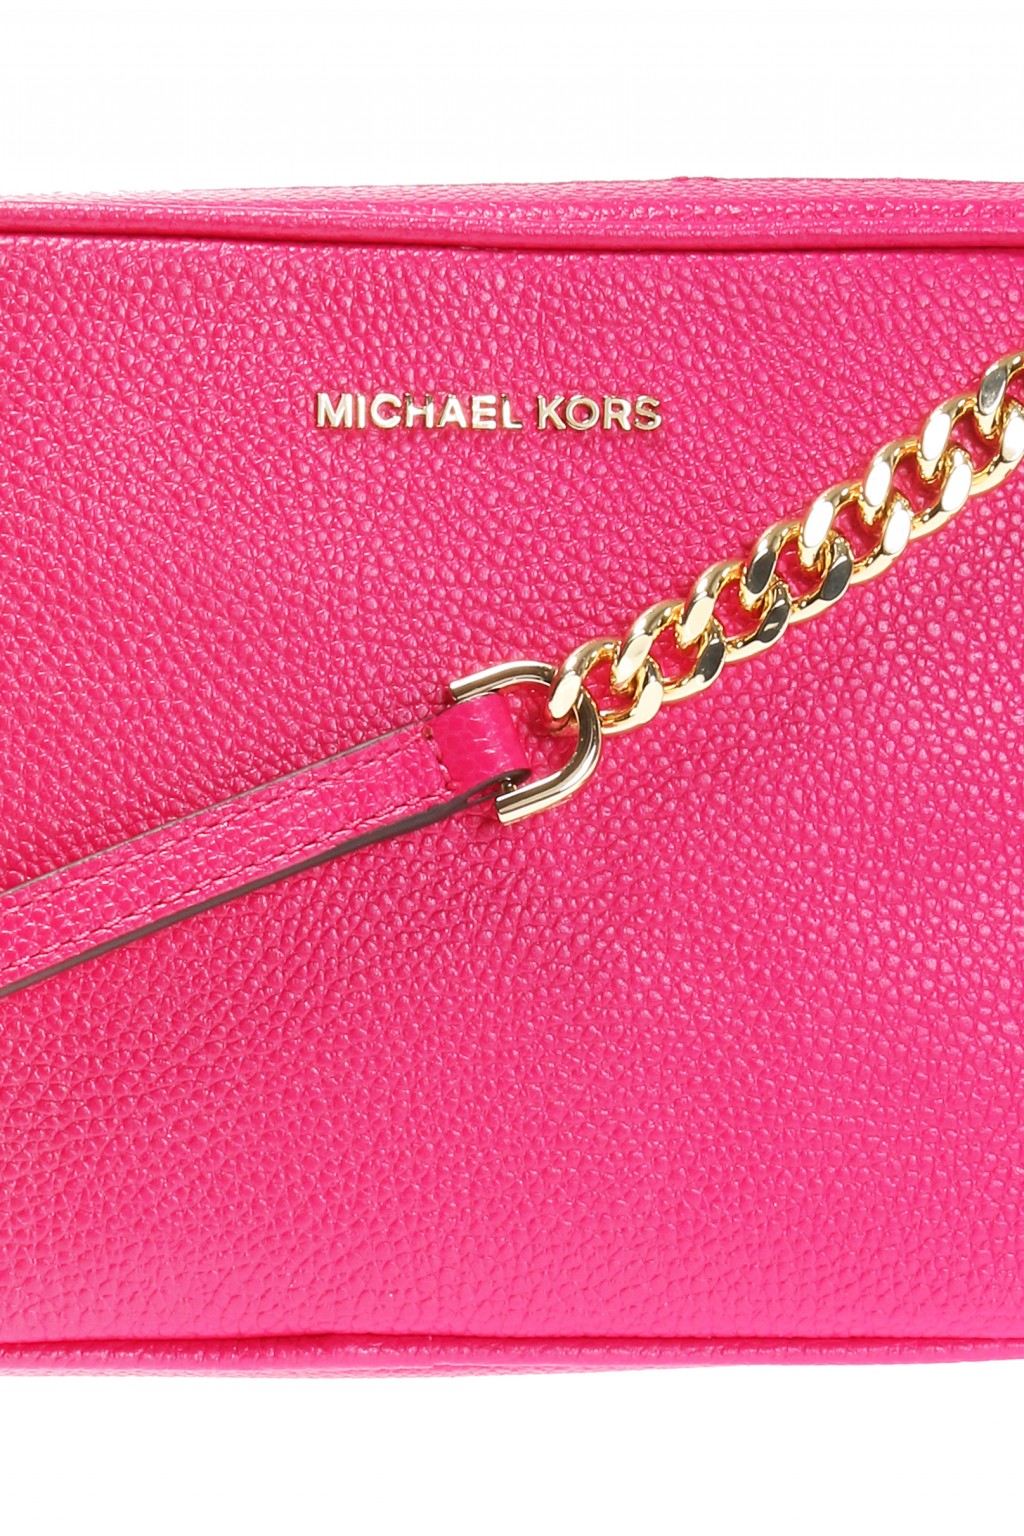 Michael Kors, Bags, Michael Kors Floral Envelope Clutch Crossbody Bag